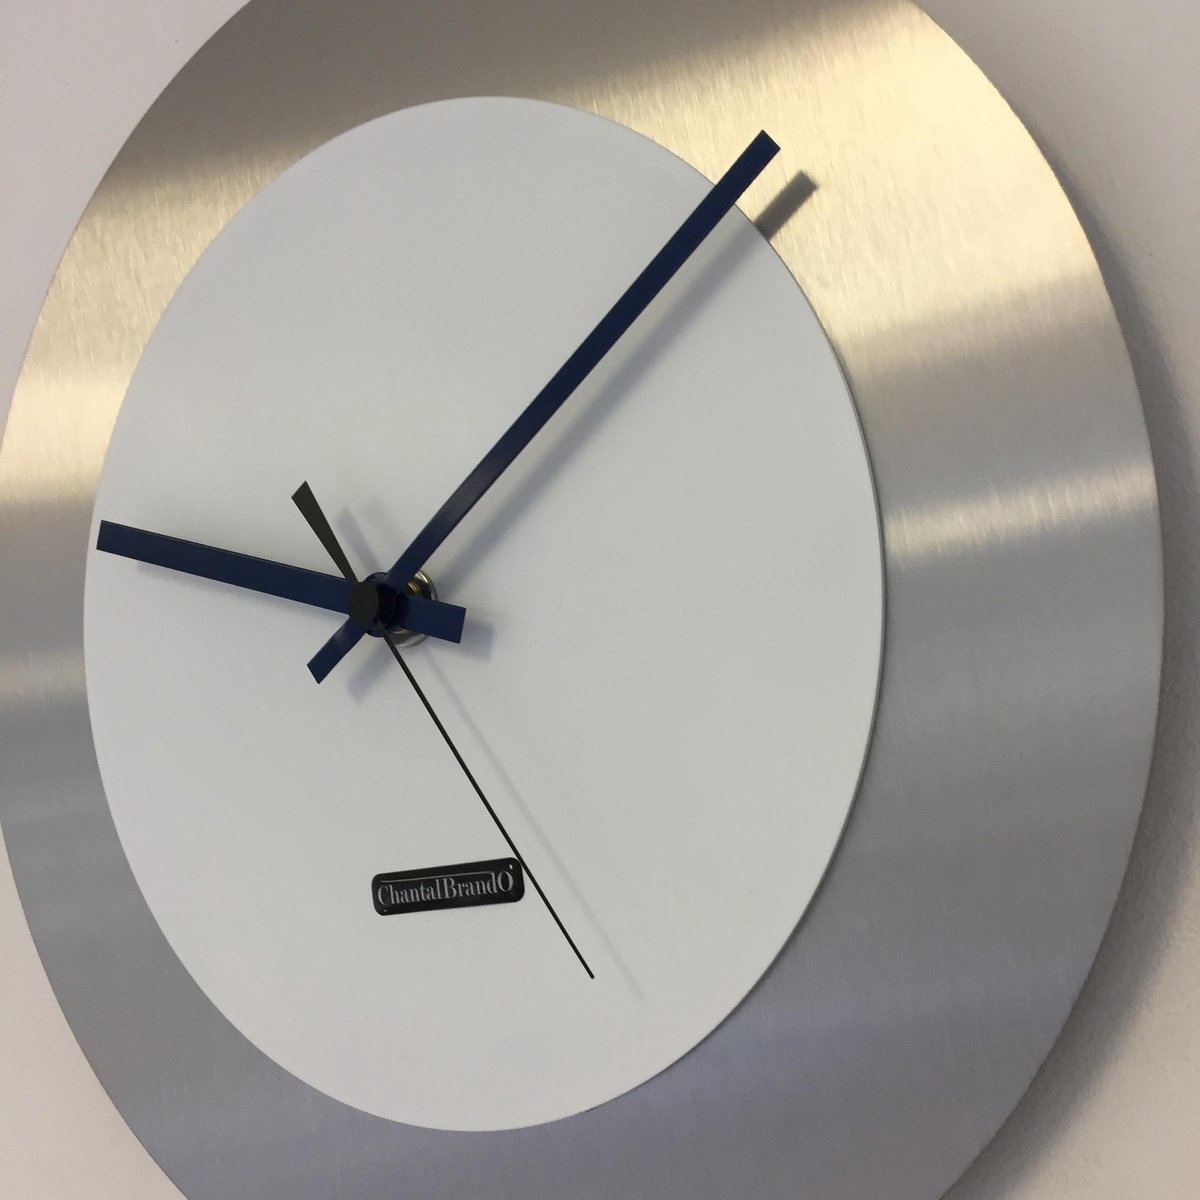 ChantalBrandO Design - Wall clock - Silent timepiece - Handmade - Chantalbrando Firenze White24 - Blue Pointers - Modern Design